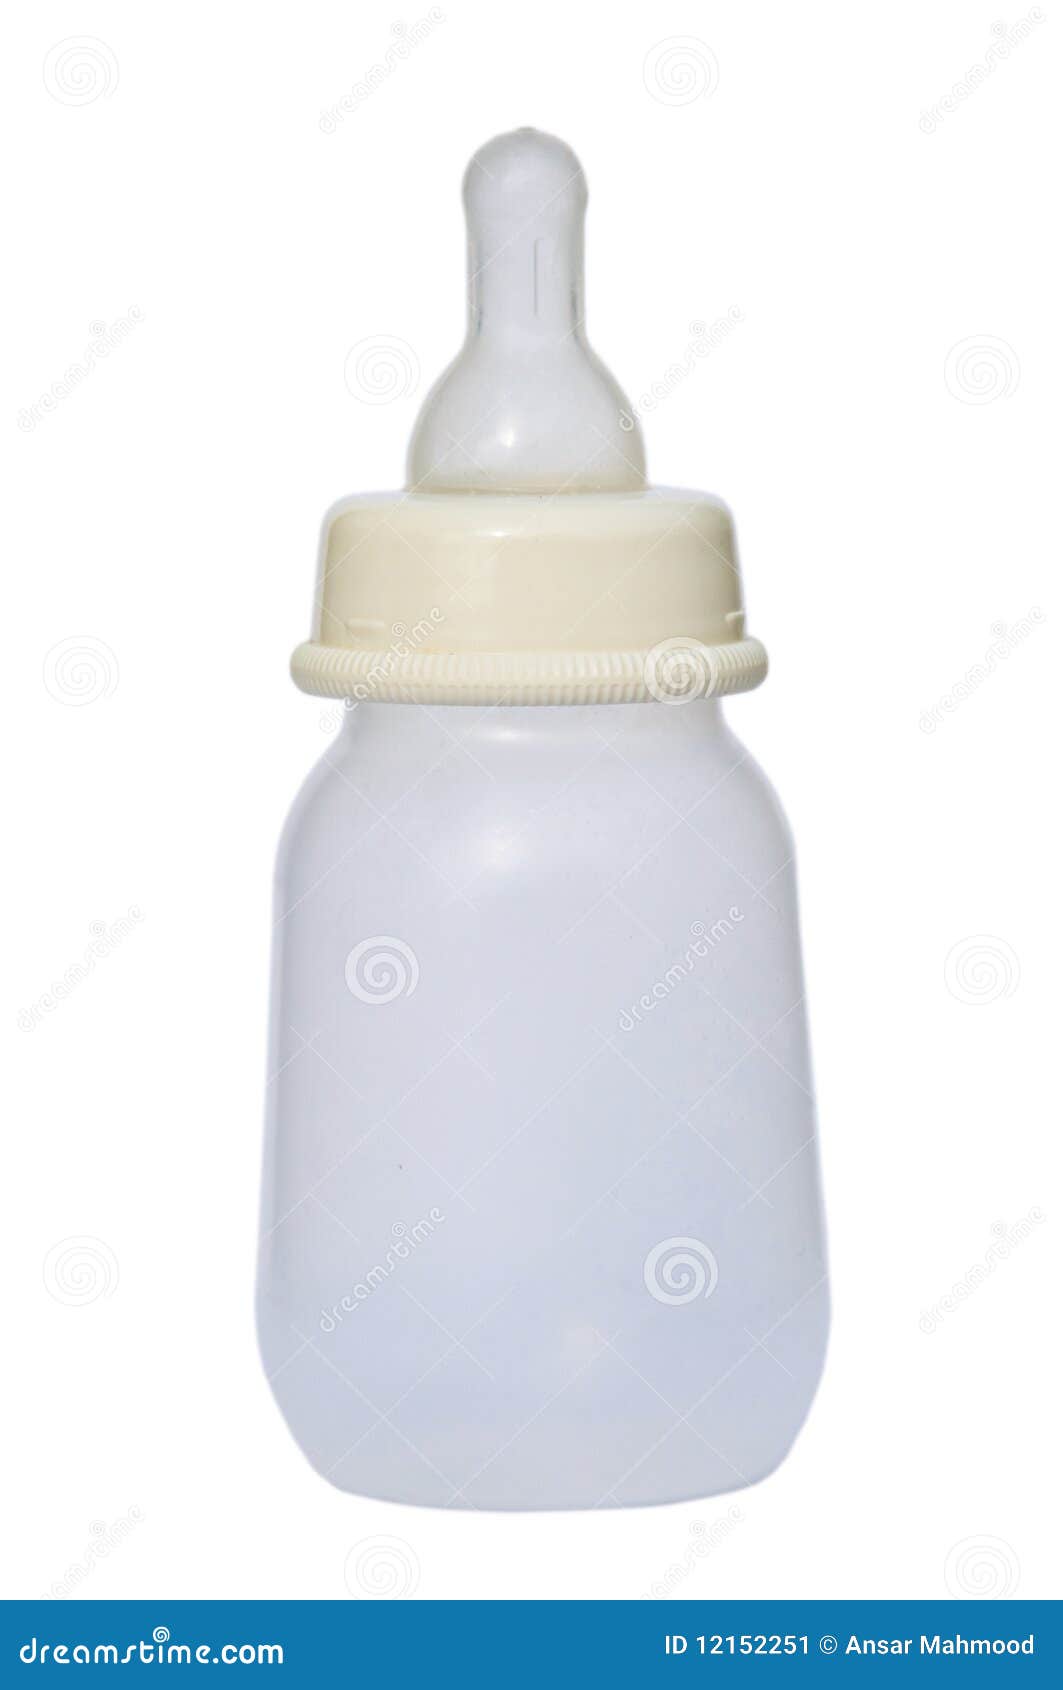 baby-milk-feeder-12152251.jpg